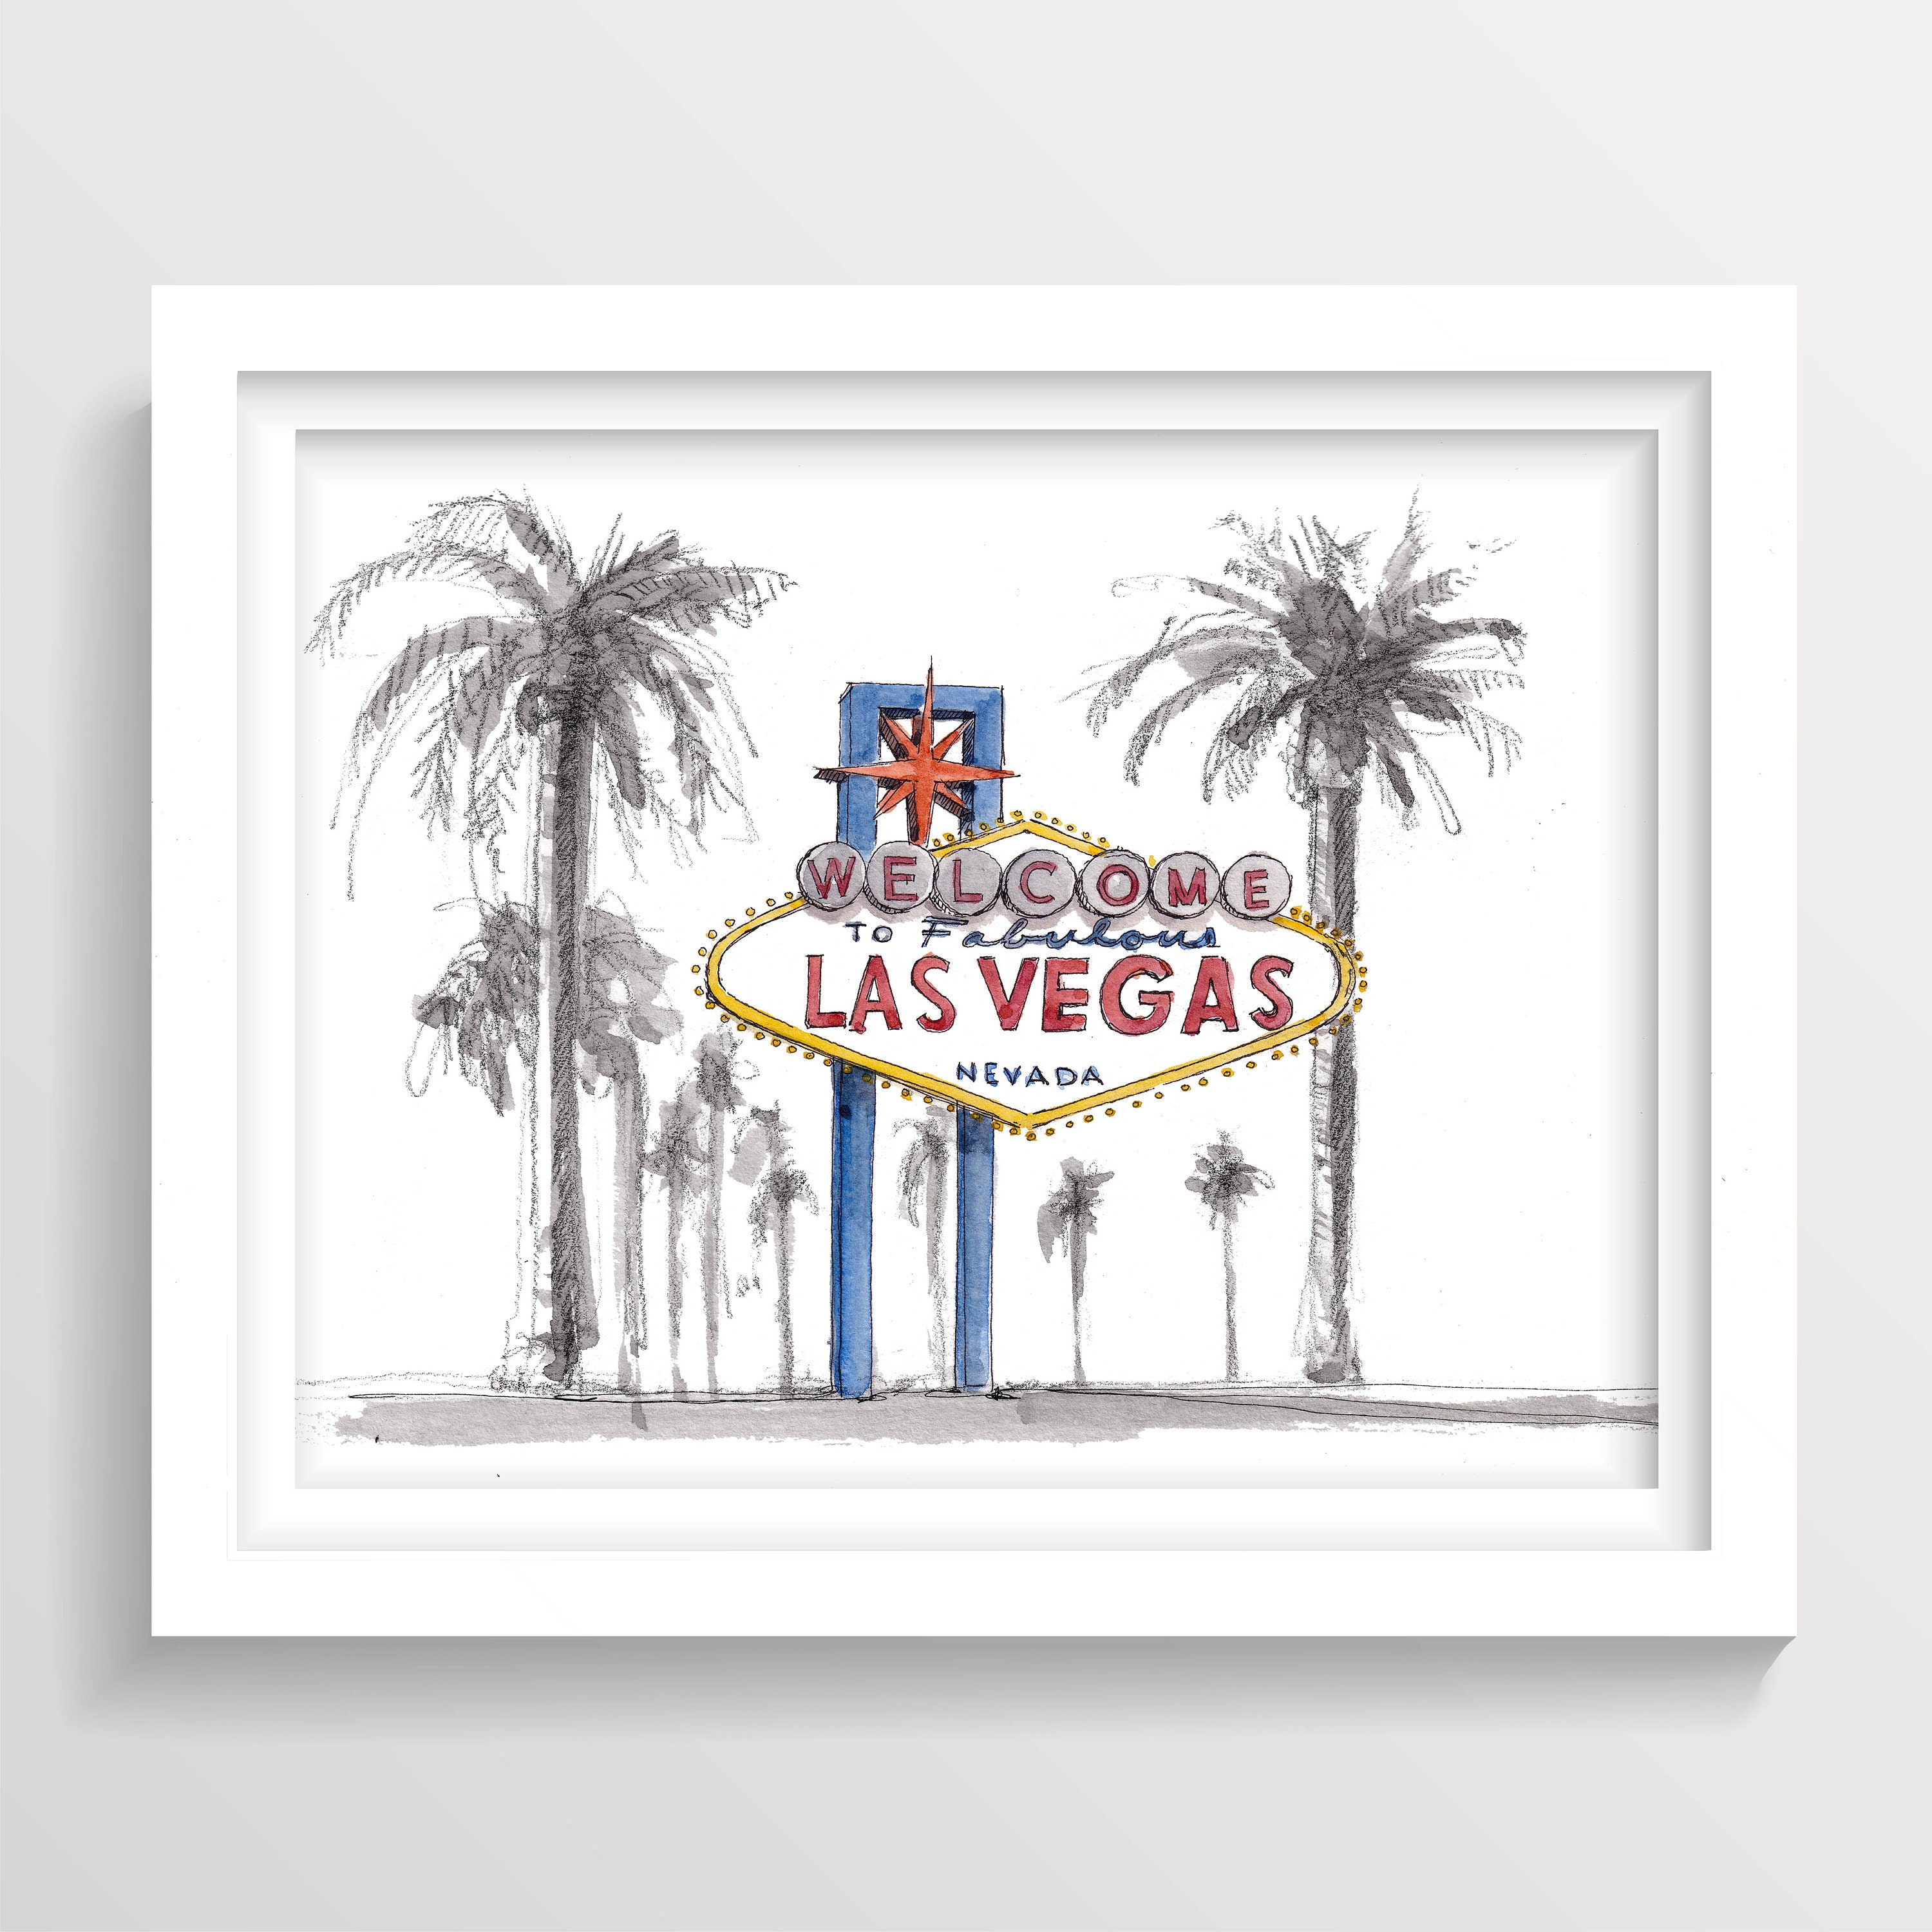 Las Vegas sign clipart, illustration